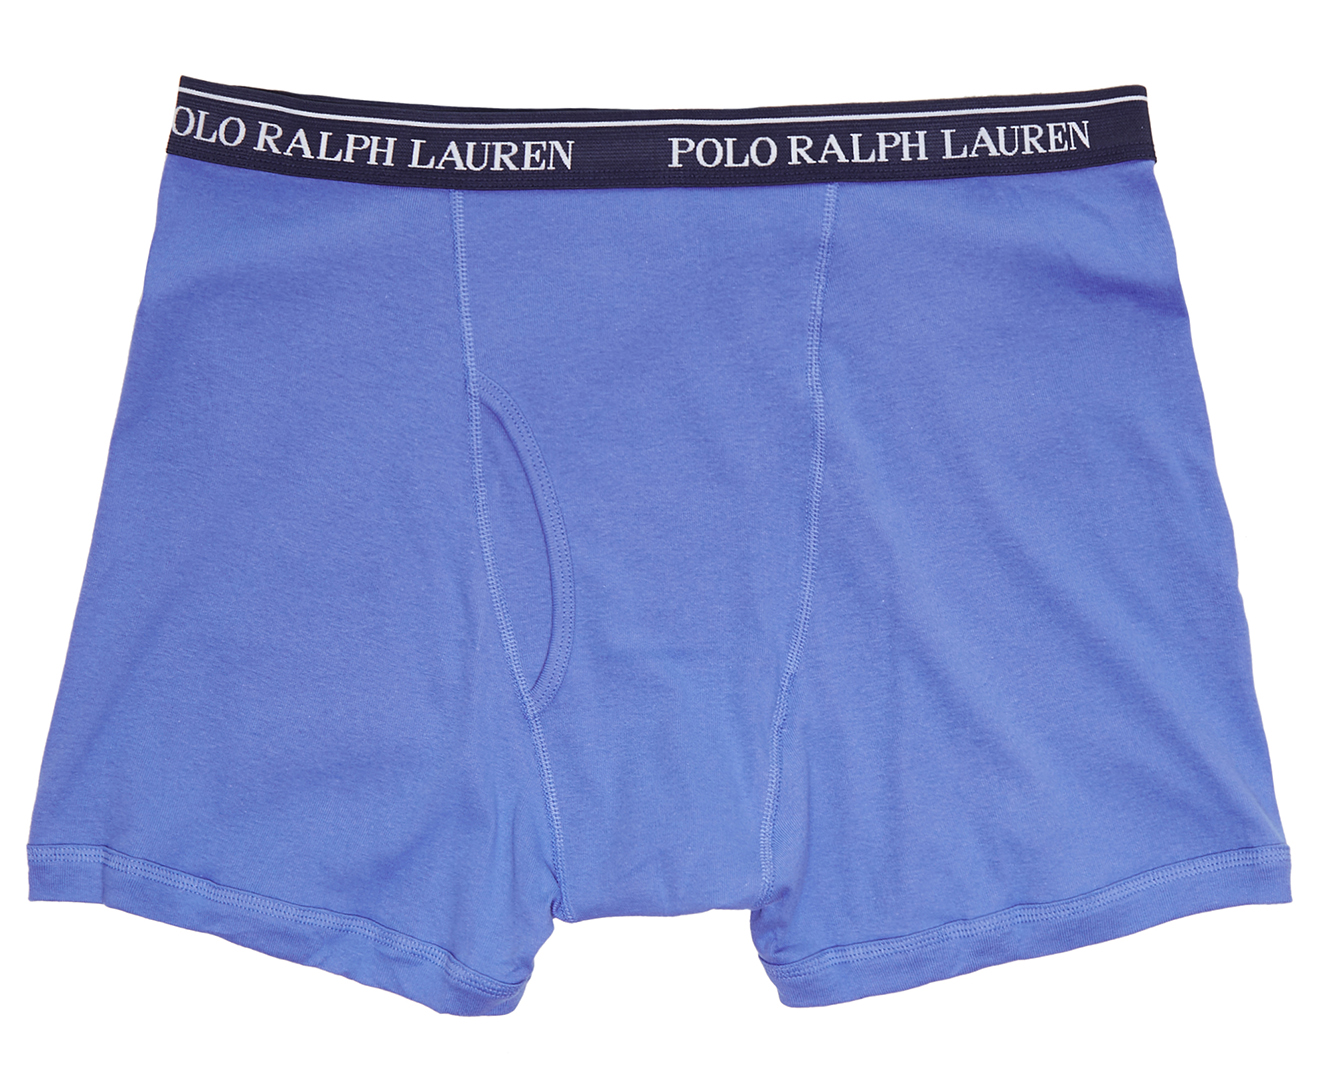  Polo Ralph Lauren Men's Six-Pack Boxer Briefs - Blue